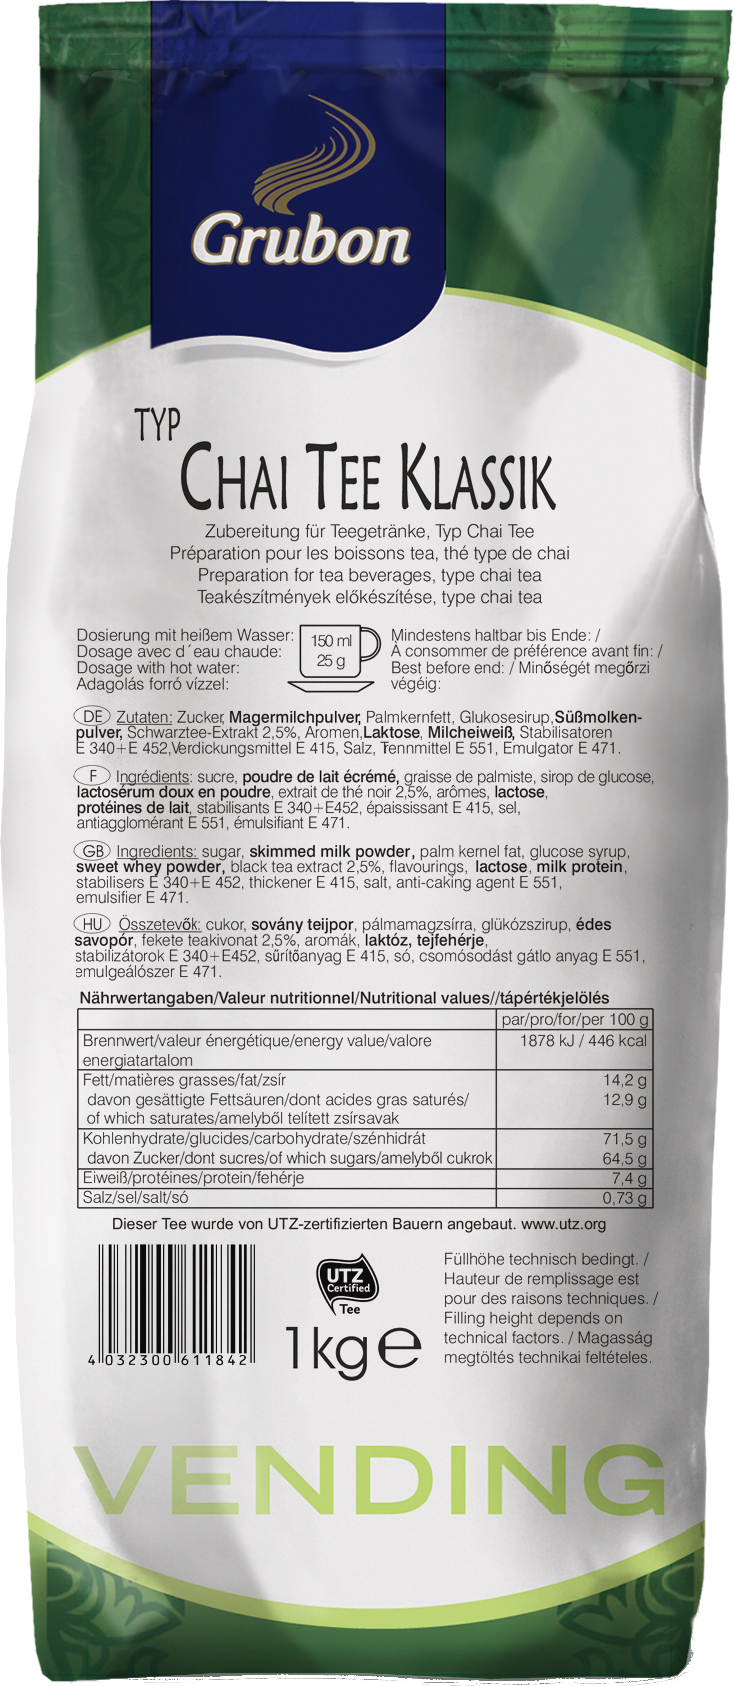 Grubon Chai Tee Classic